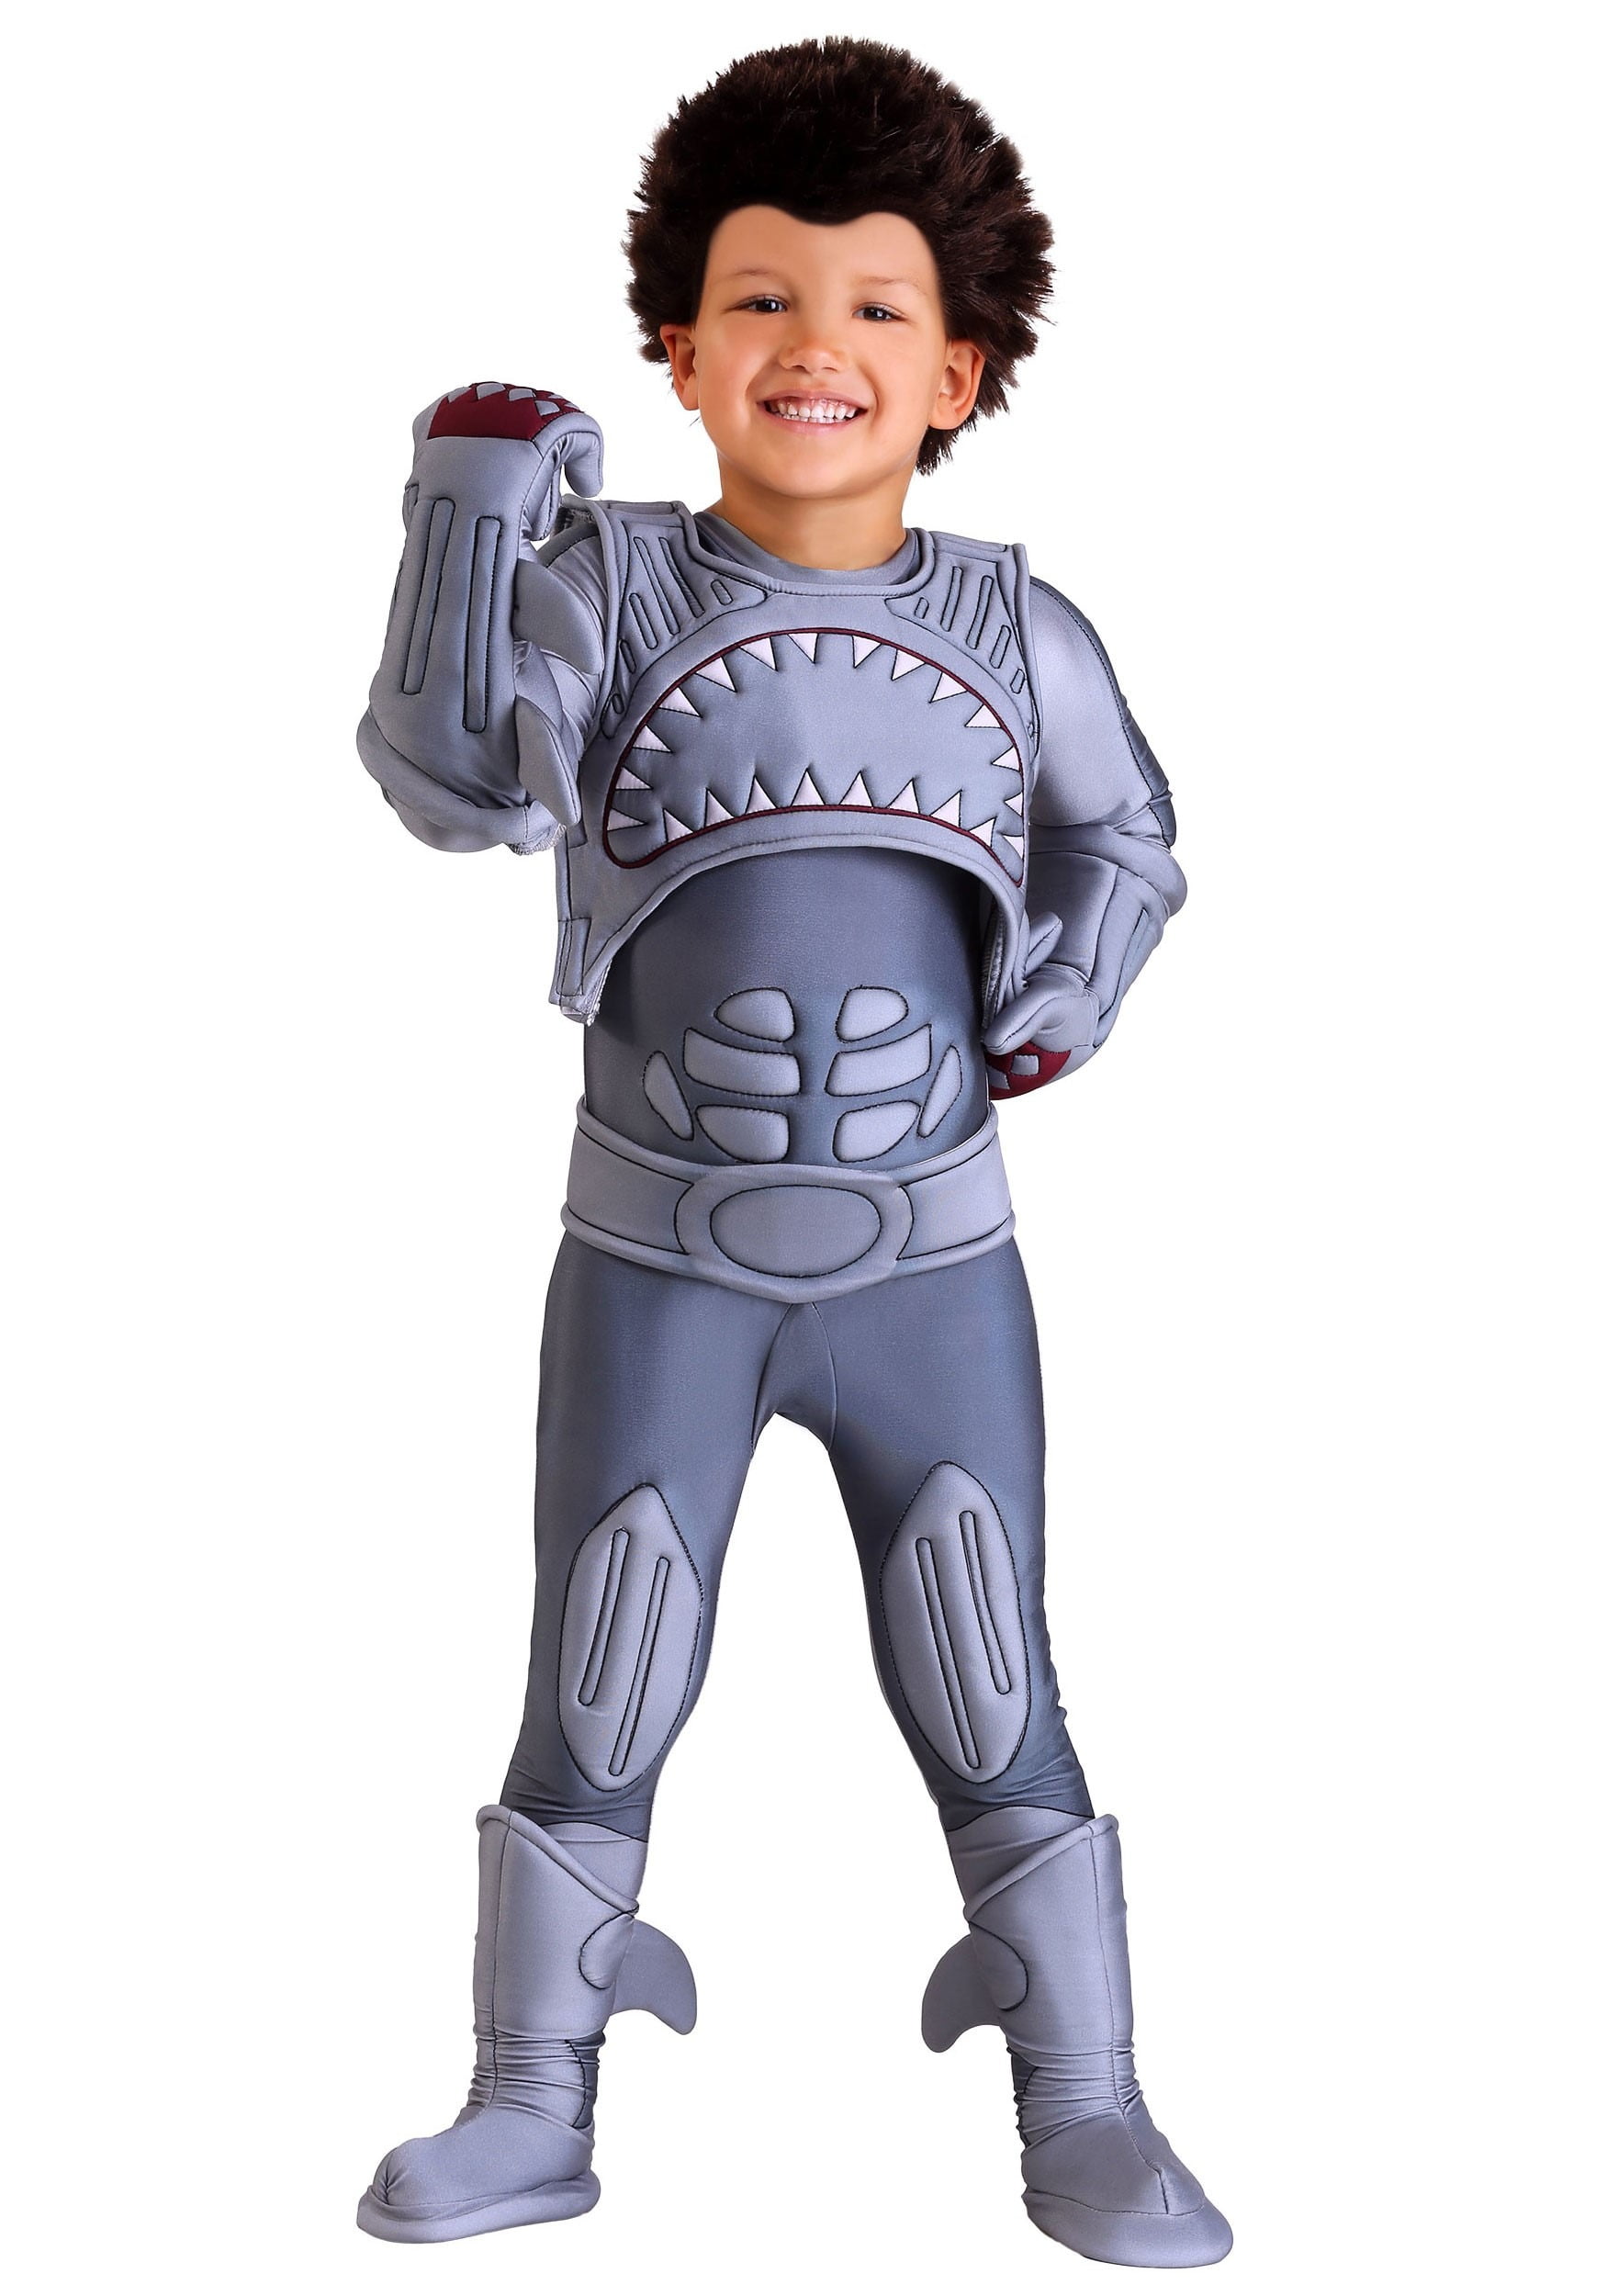 Sharkboy Toddler Costume - Walmart.com